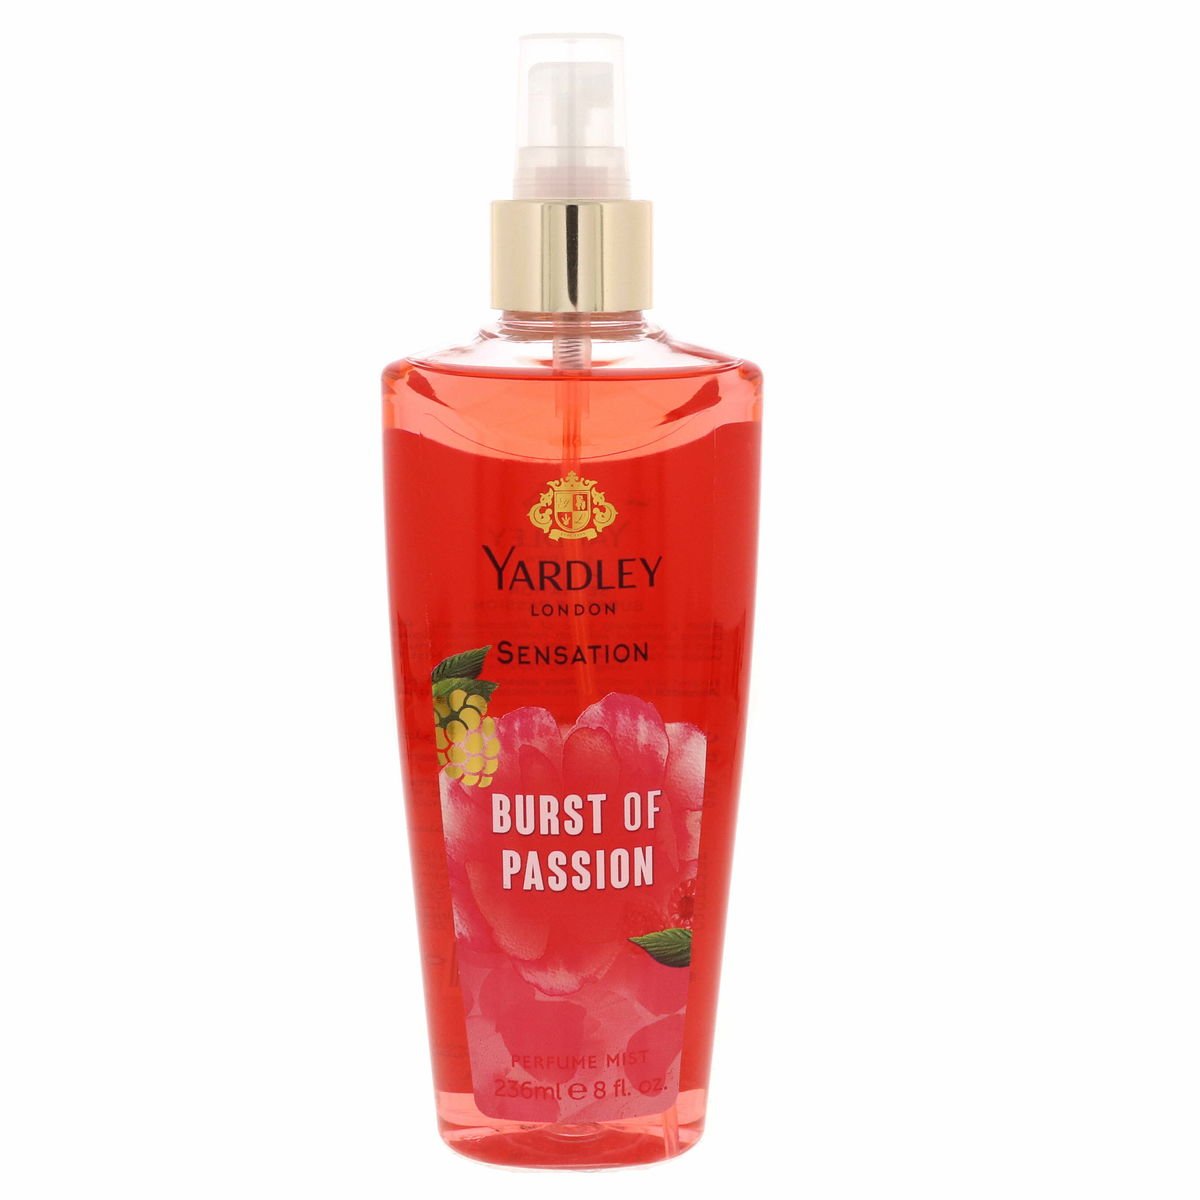 Yardley Sensation Burst Of Passion Perfume Mist 236 ml